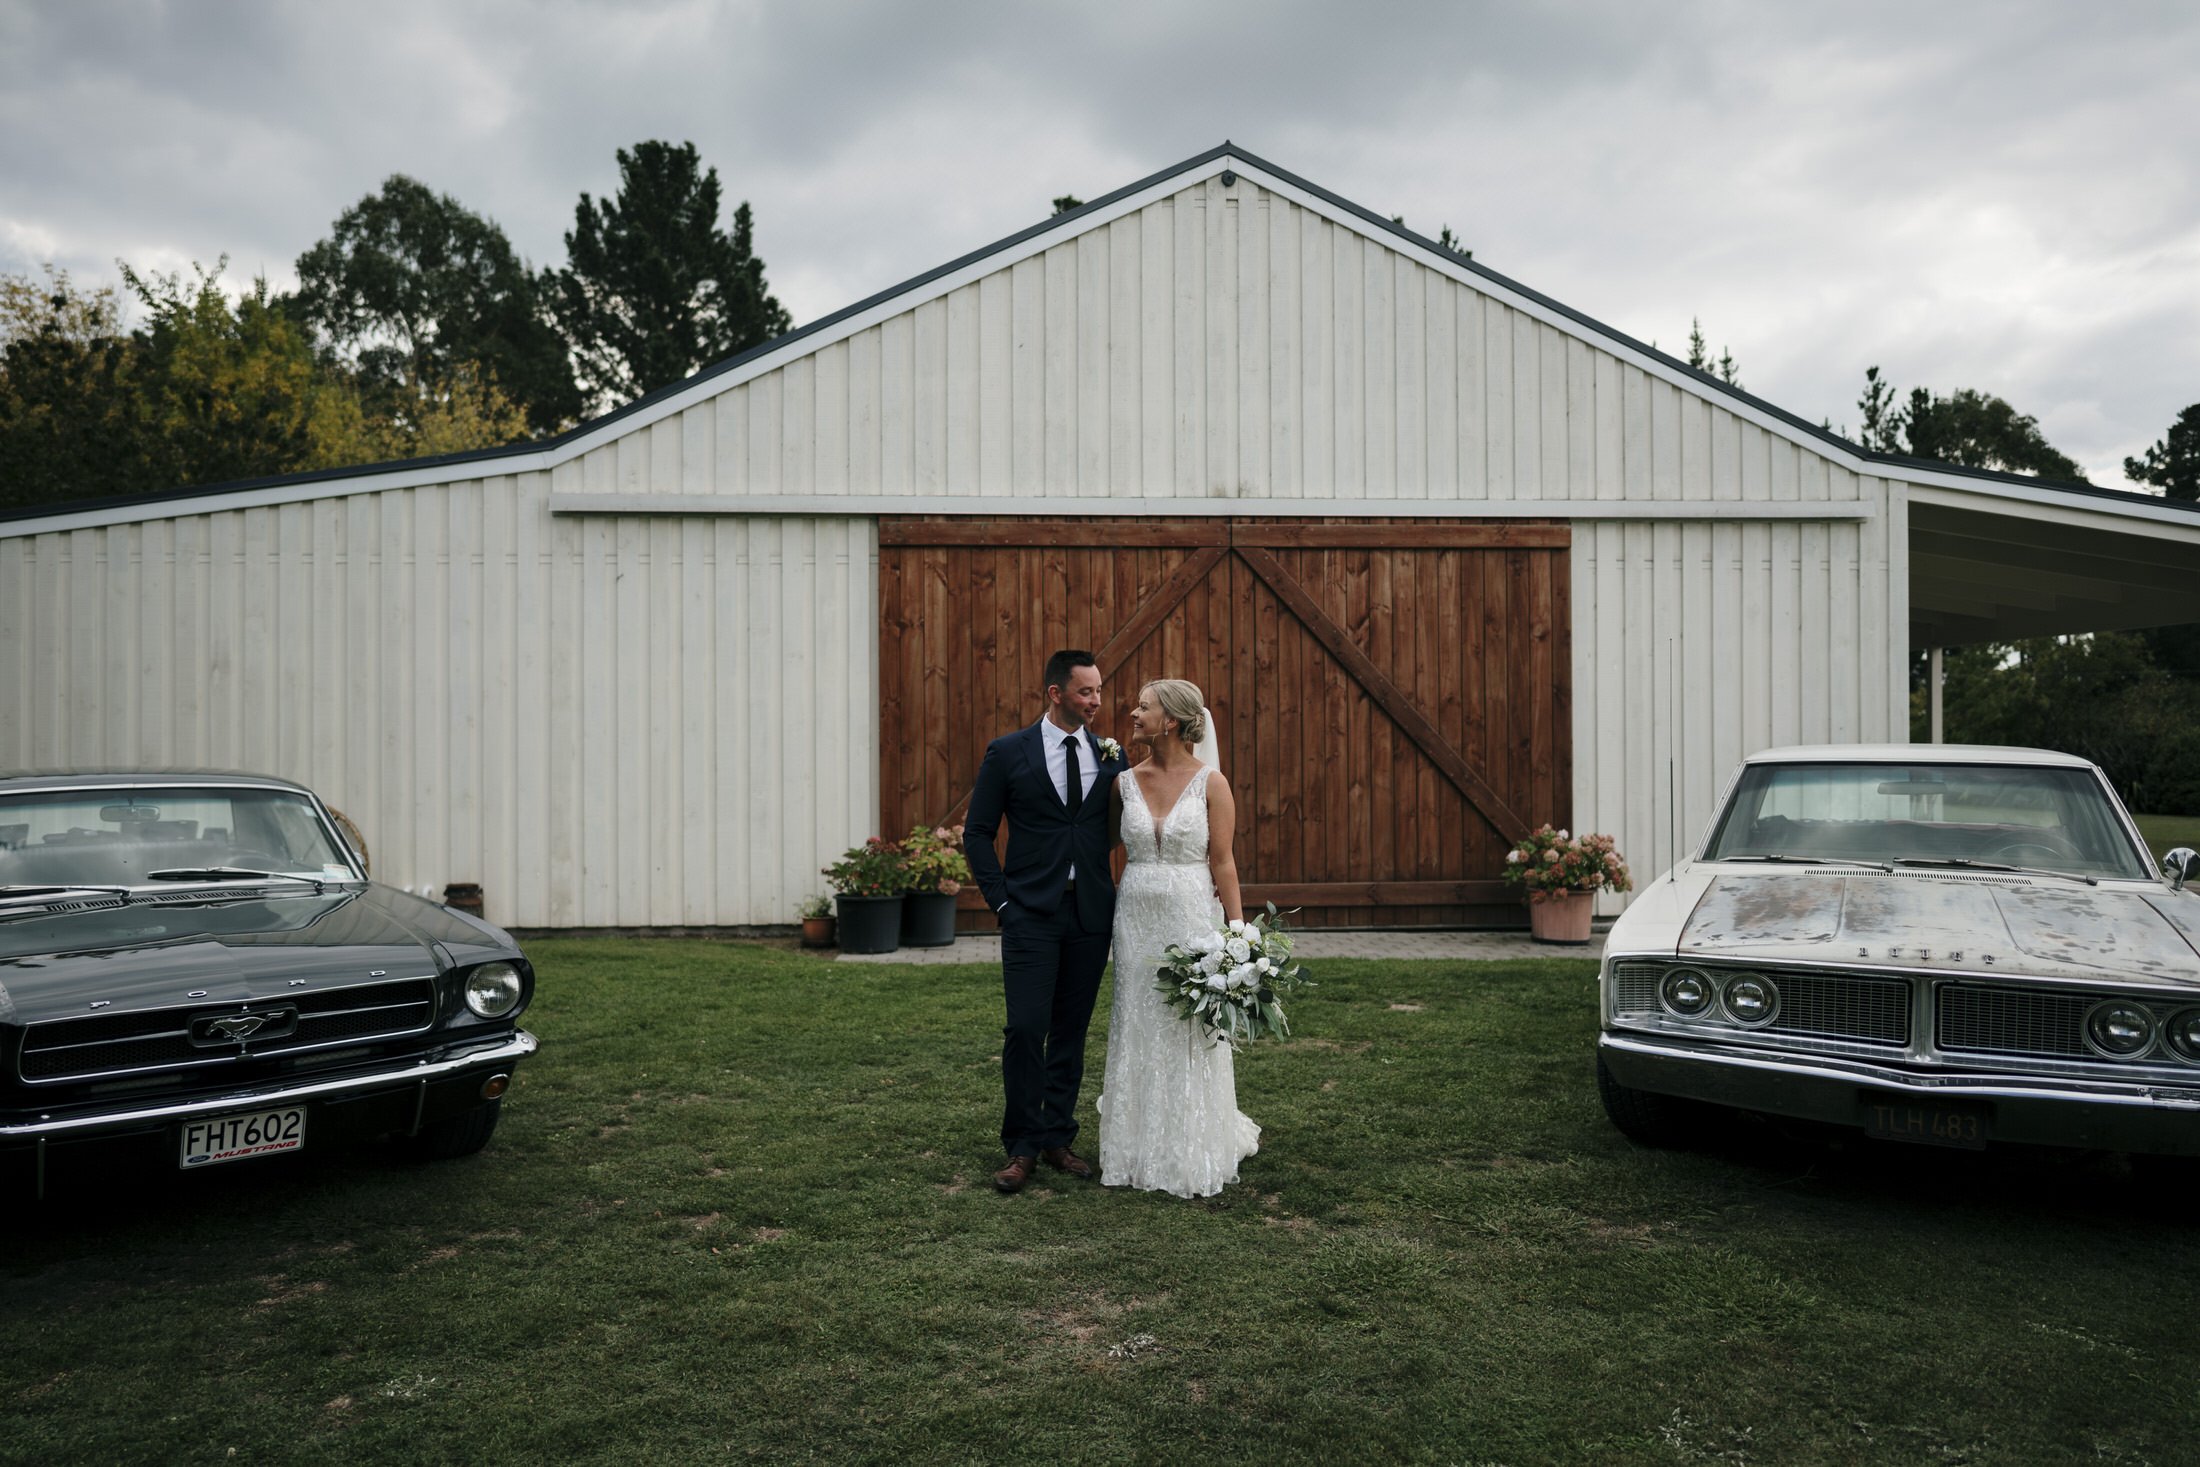 Broadlands-lodge-taupo-wedding-venue-auckland-photographer-videographer-destination-barn-farm-outdoor-ceremony (3).jpg